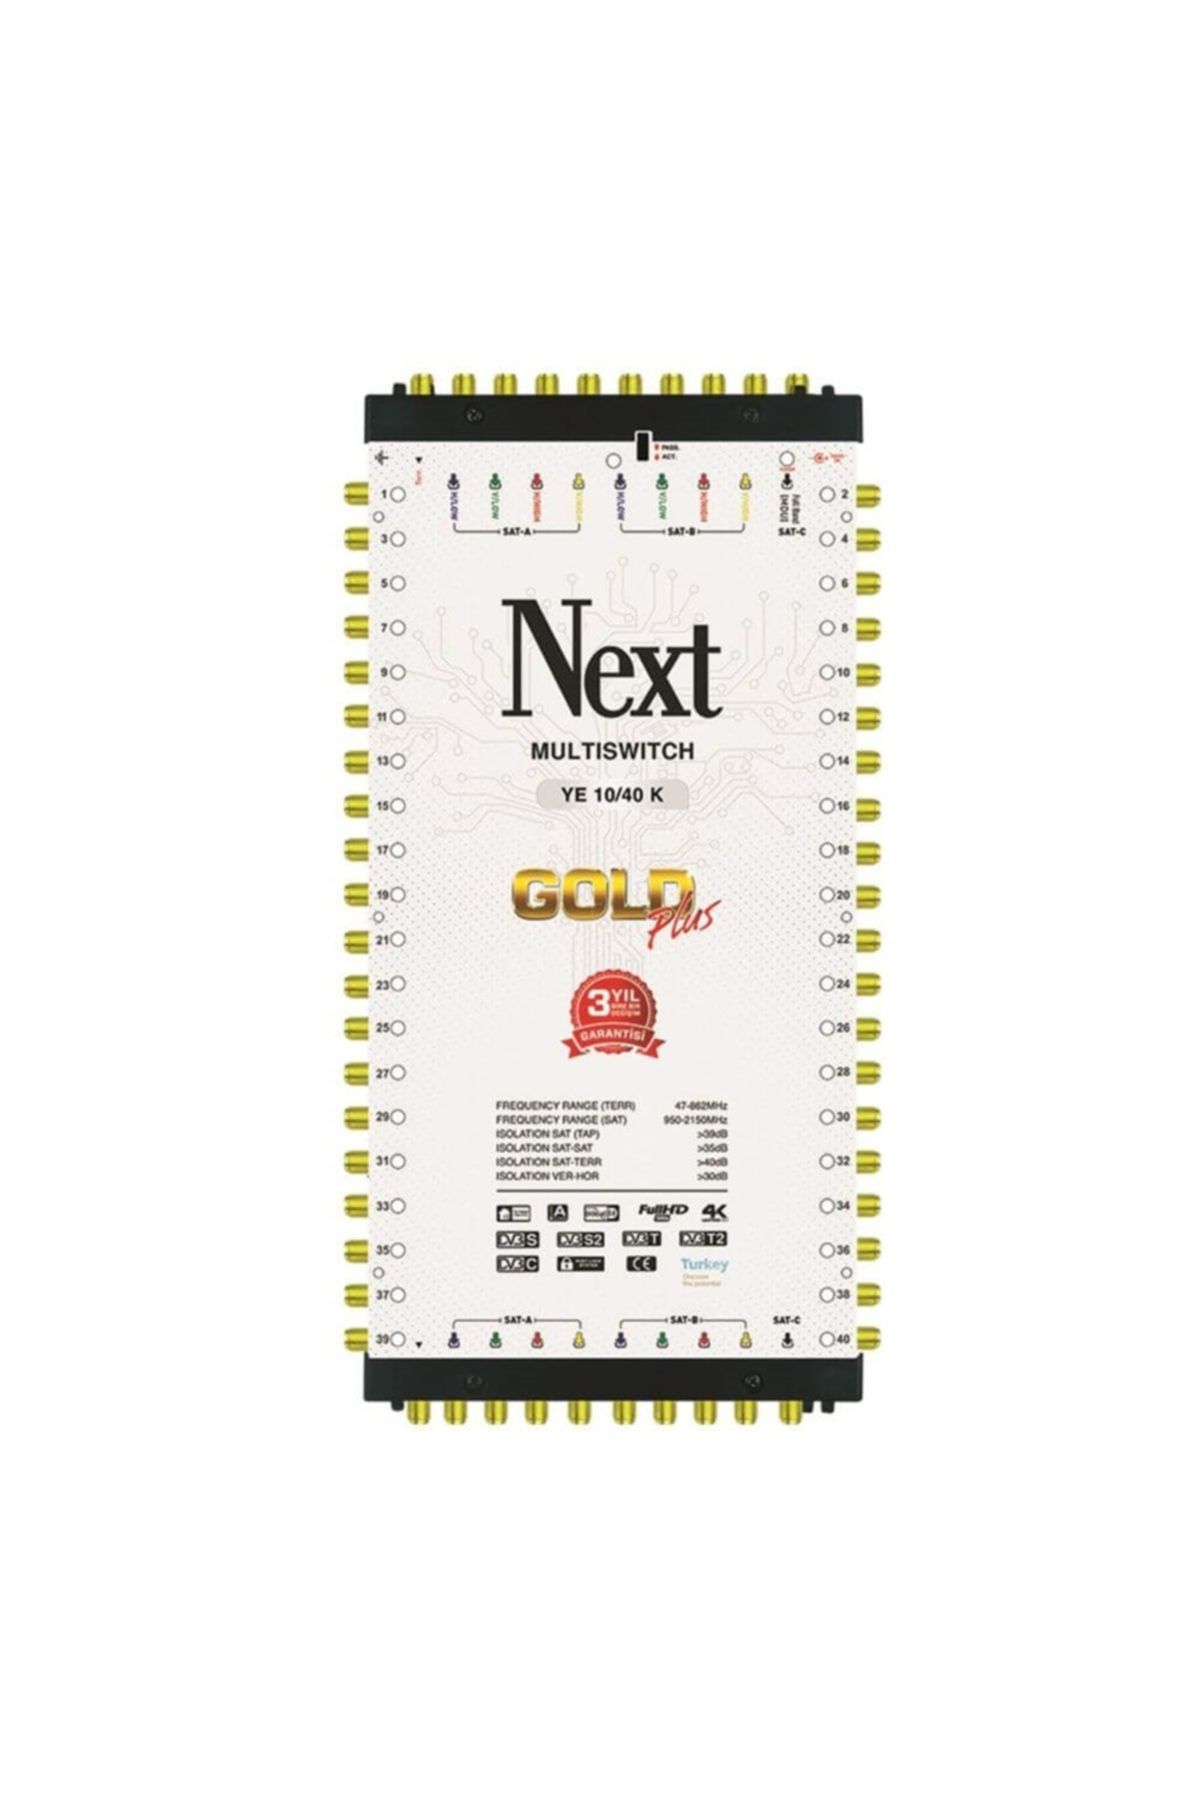 Next Nextstar Next 10/40 Kaskatlı Gold Plus Multiswitch Uydu Santrali